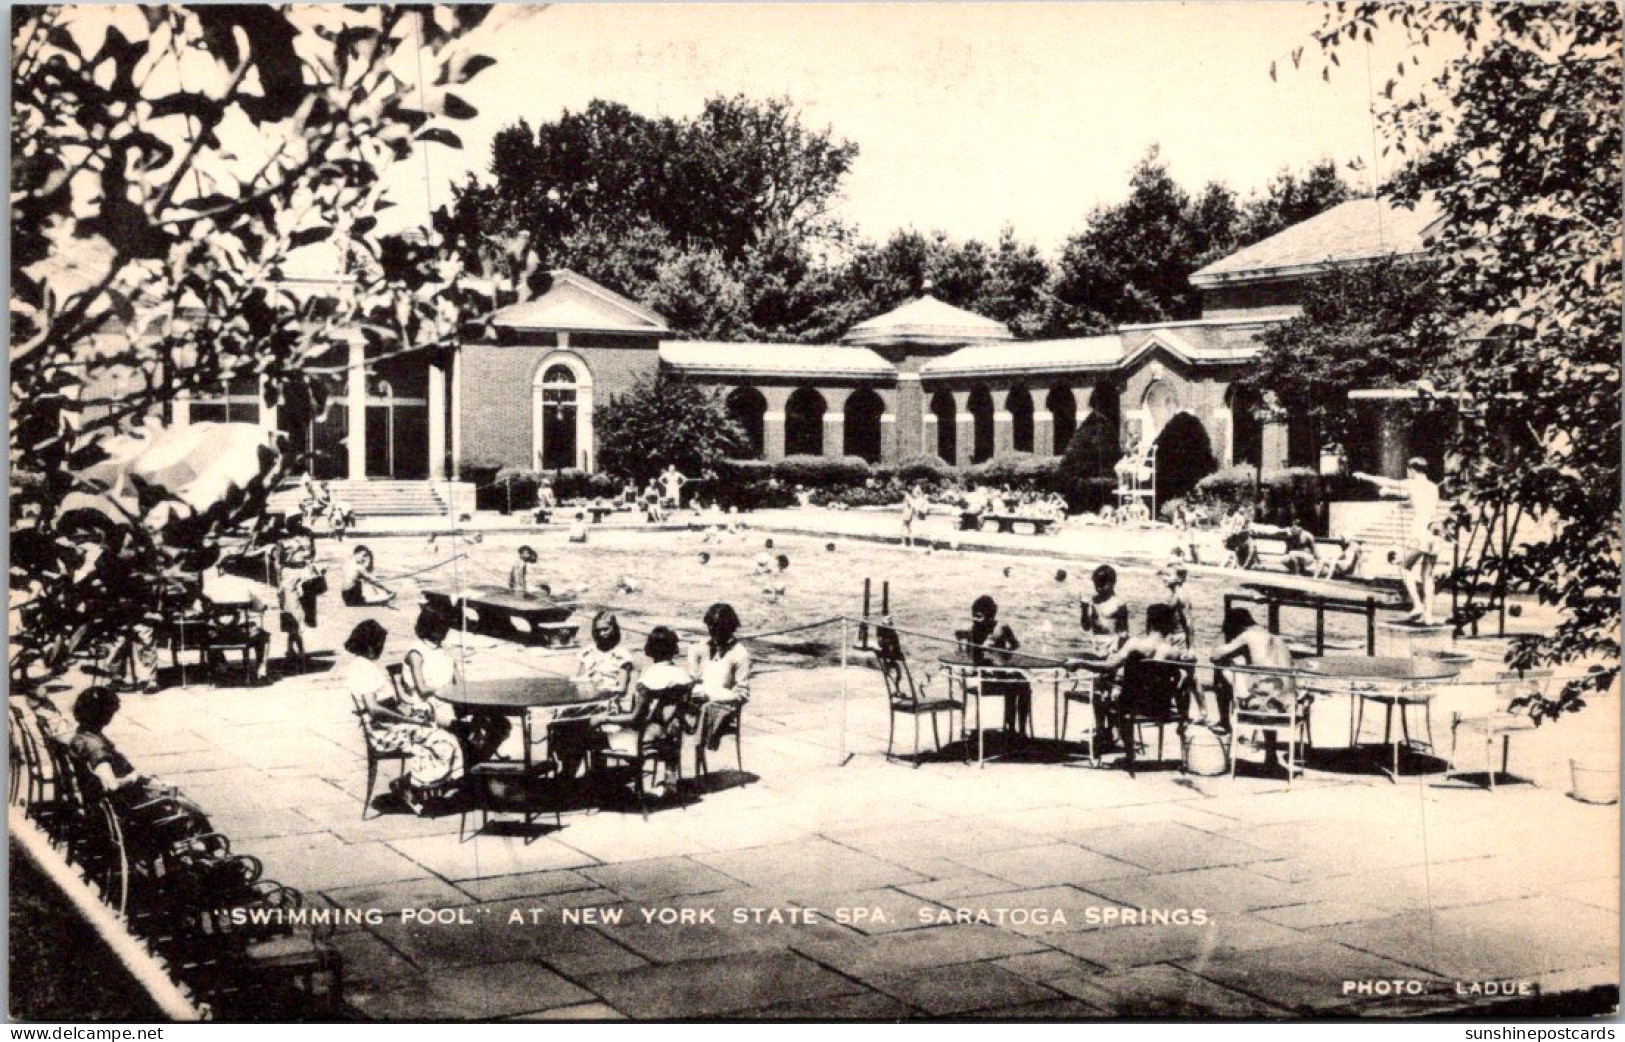 New York Saratoga Springs The Swimming Pool At The New York State Spa - Saratoga Springs